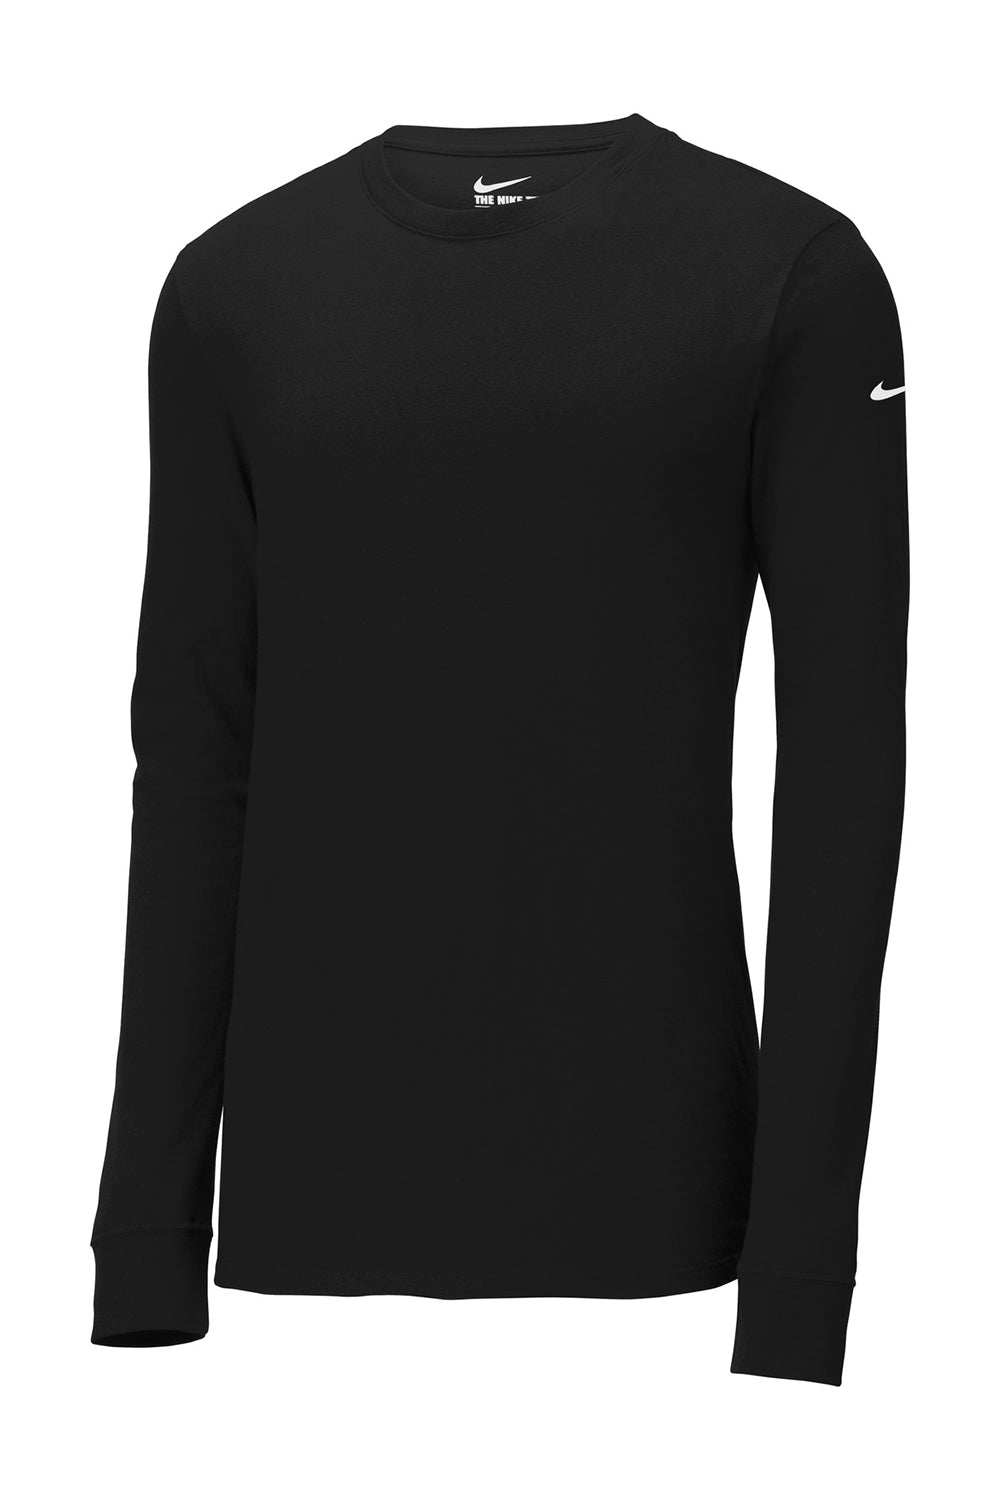 Nike NKBQ5230 Mens Dri-Fit Moisture Wicking Long Sleeve Crewneck T-Shirt Black Flat Front